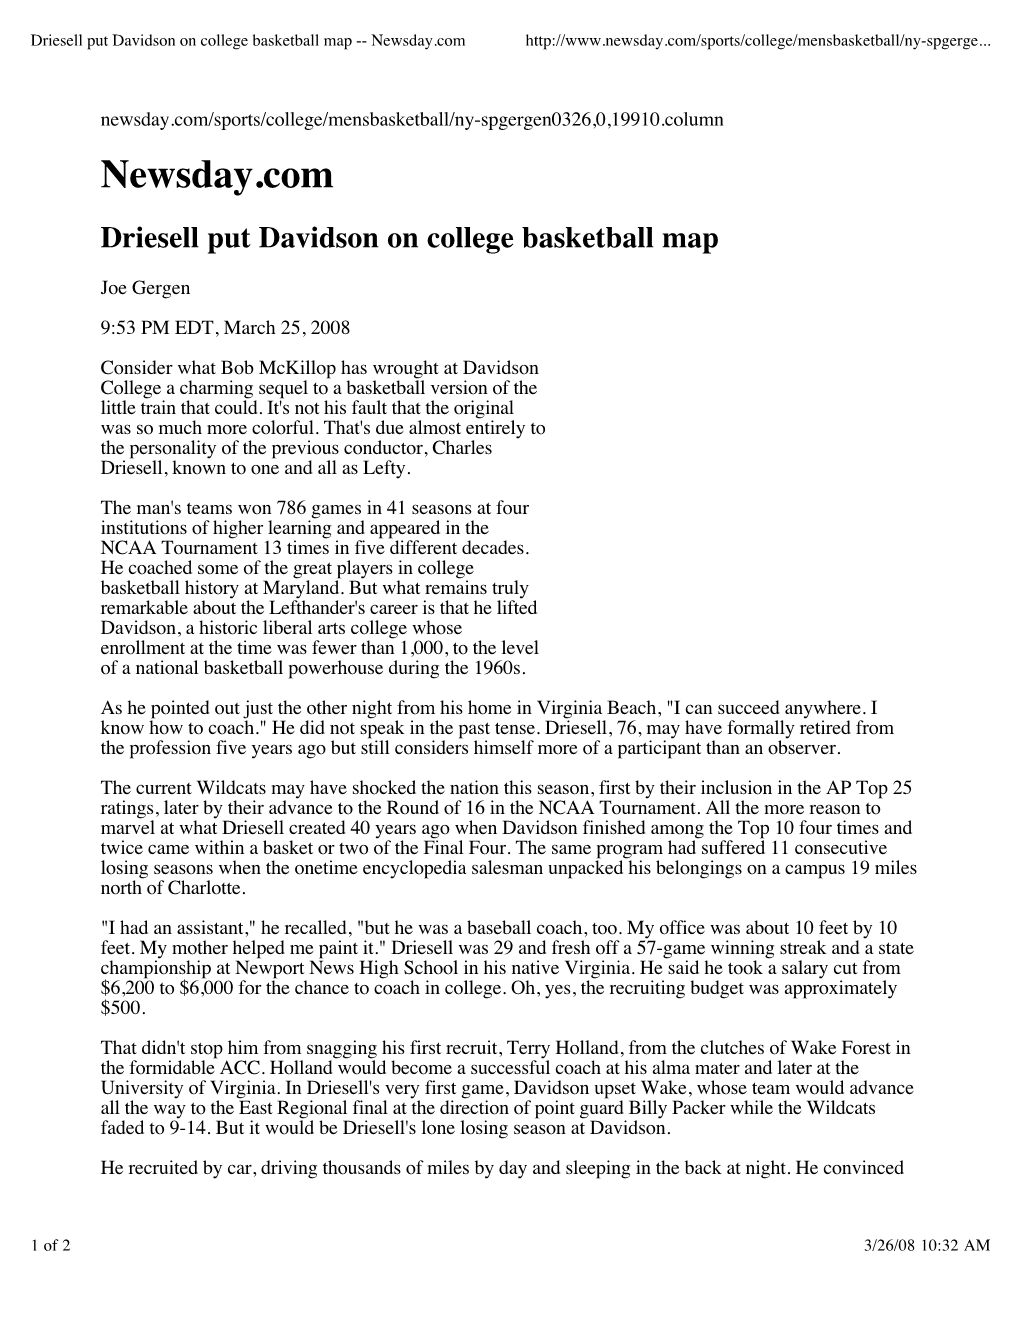 Driesell Put Davidson on College Basketball Map -- Newsday.Com